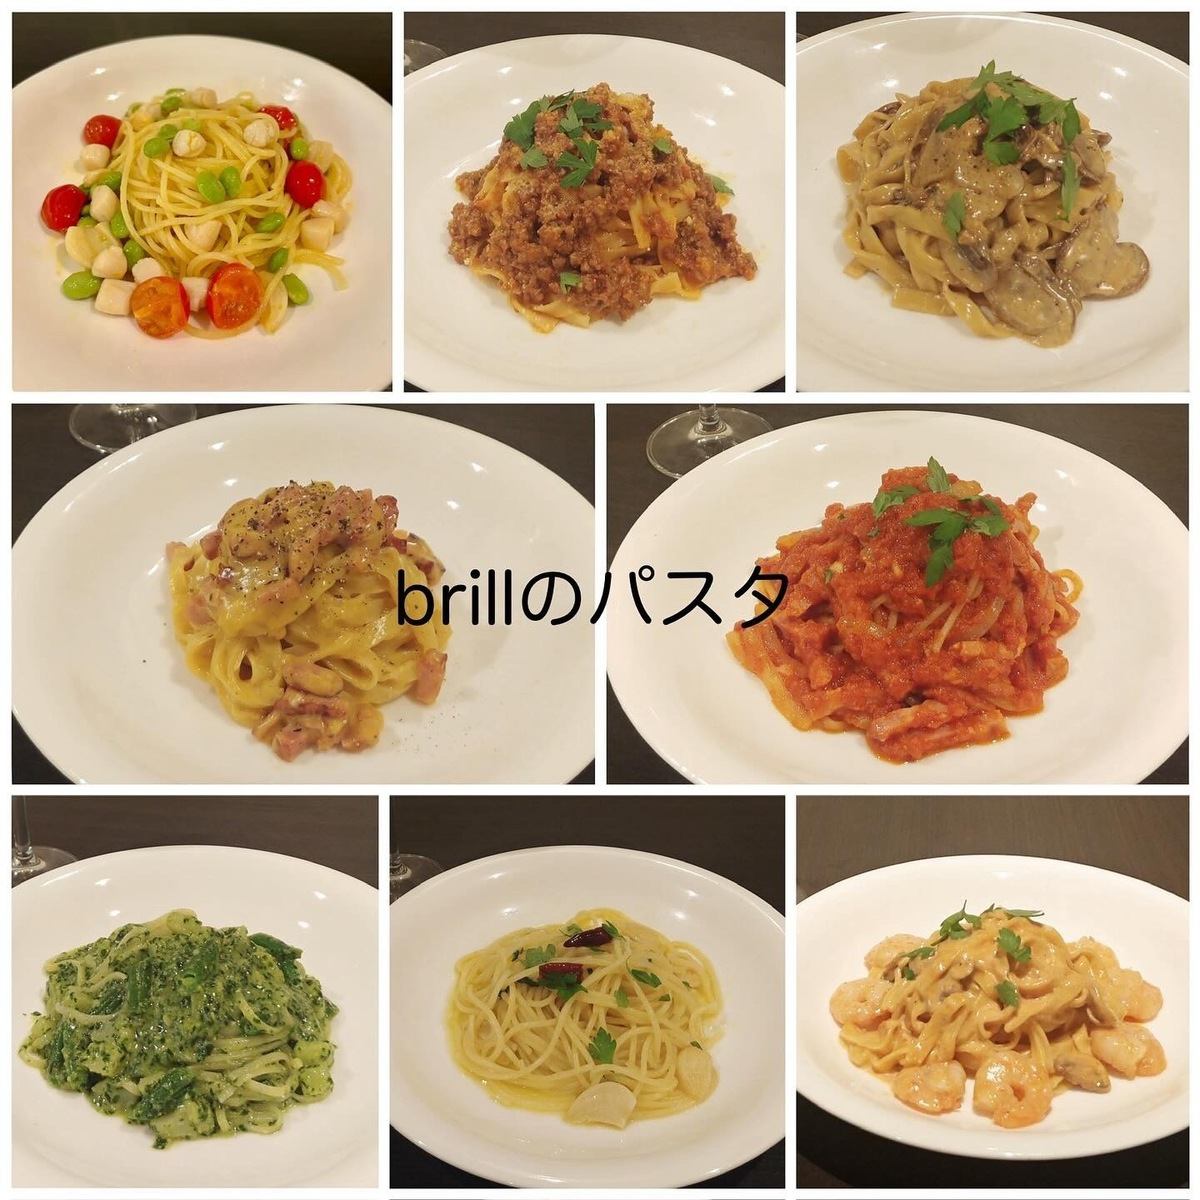 8 types of pasta